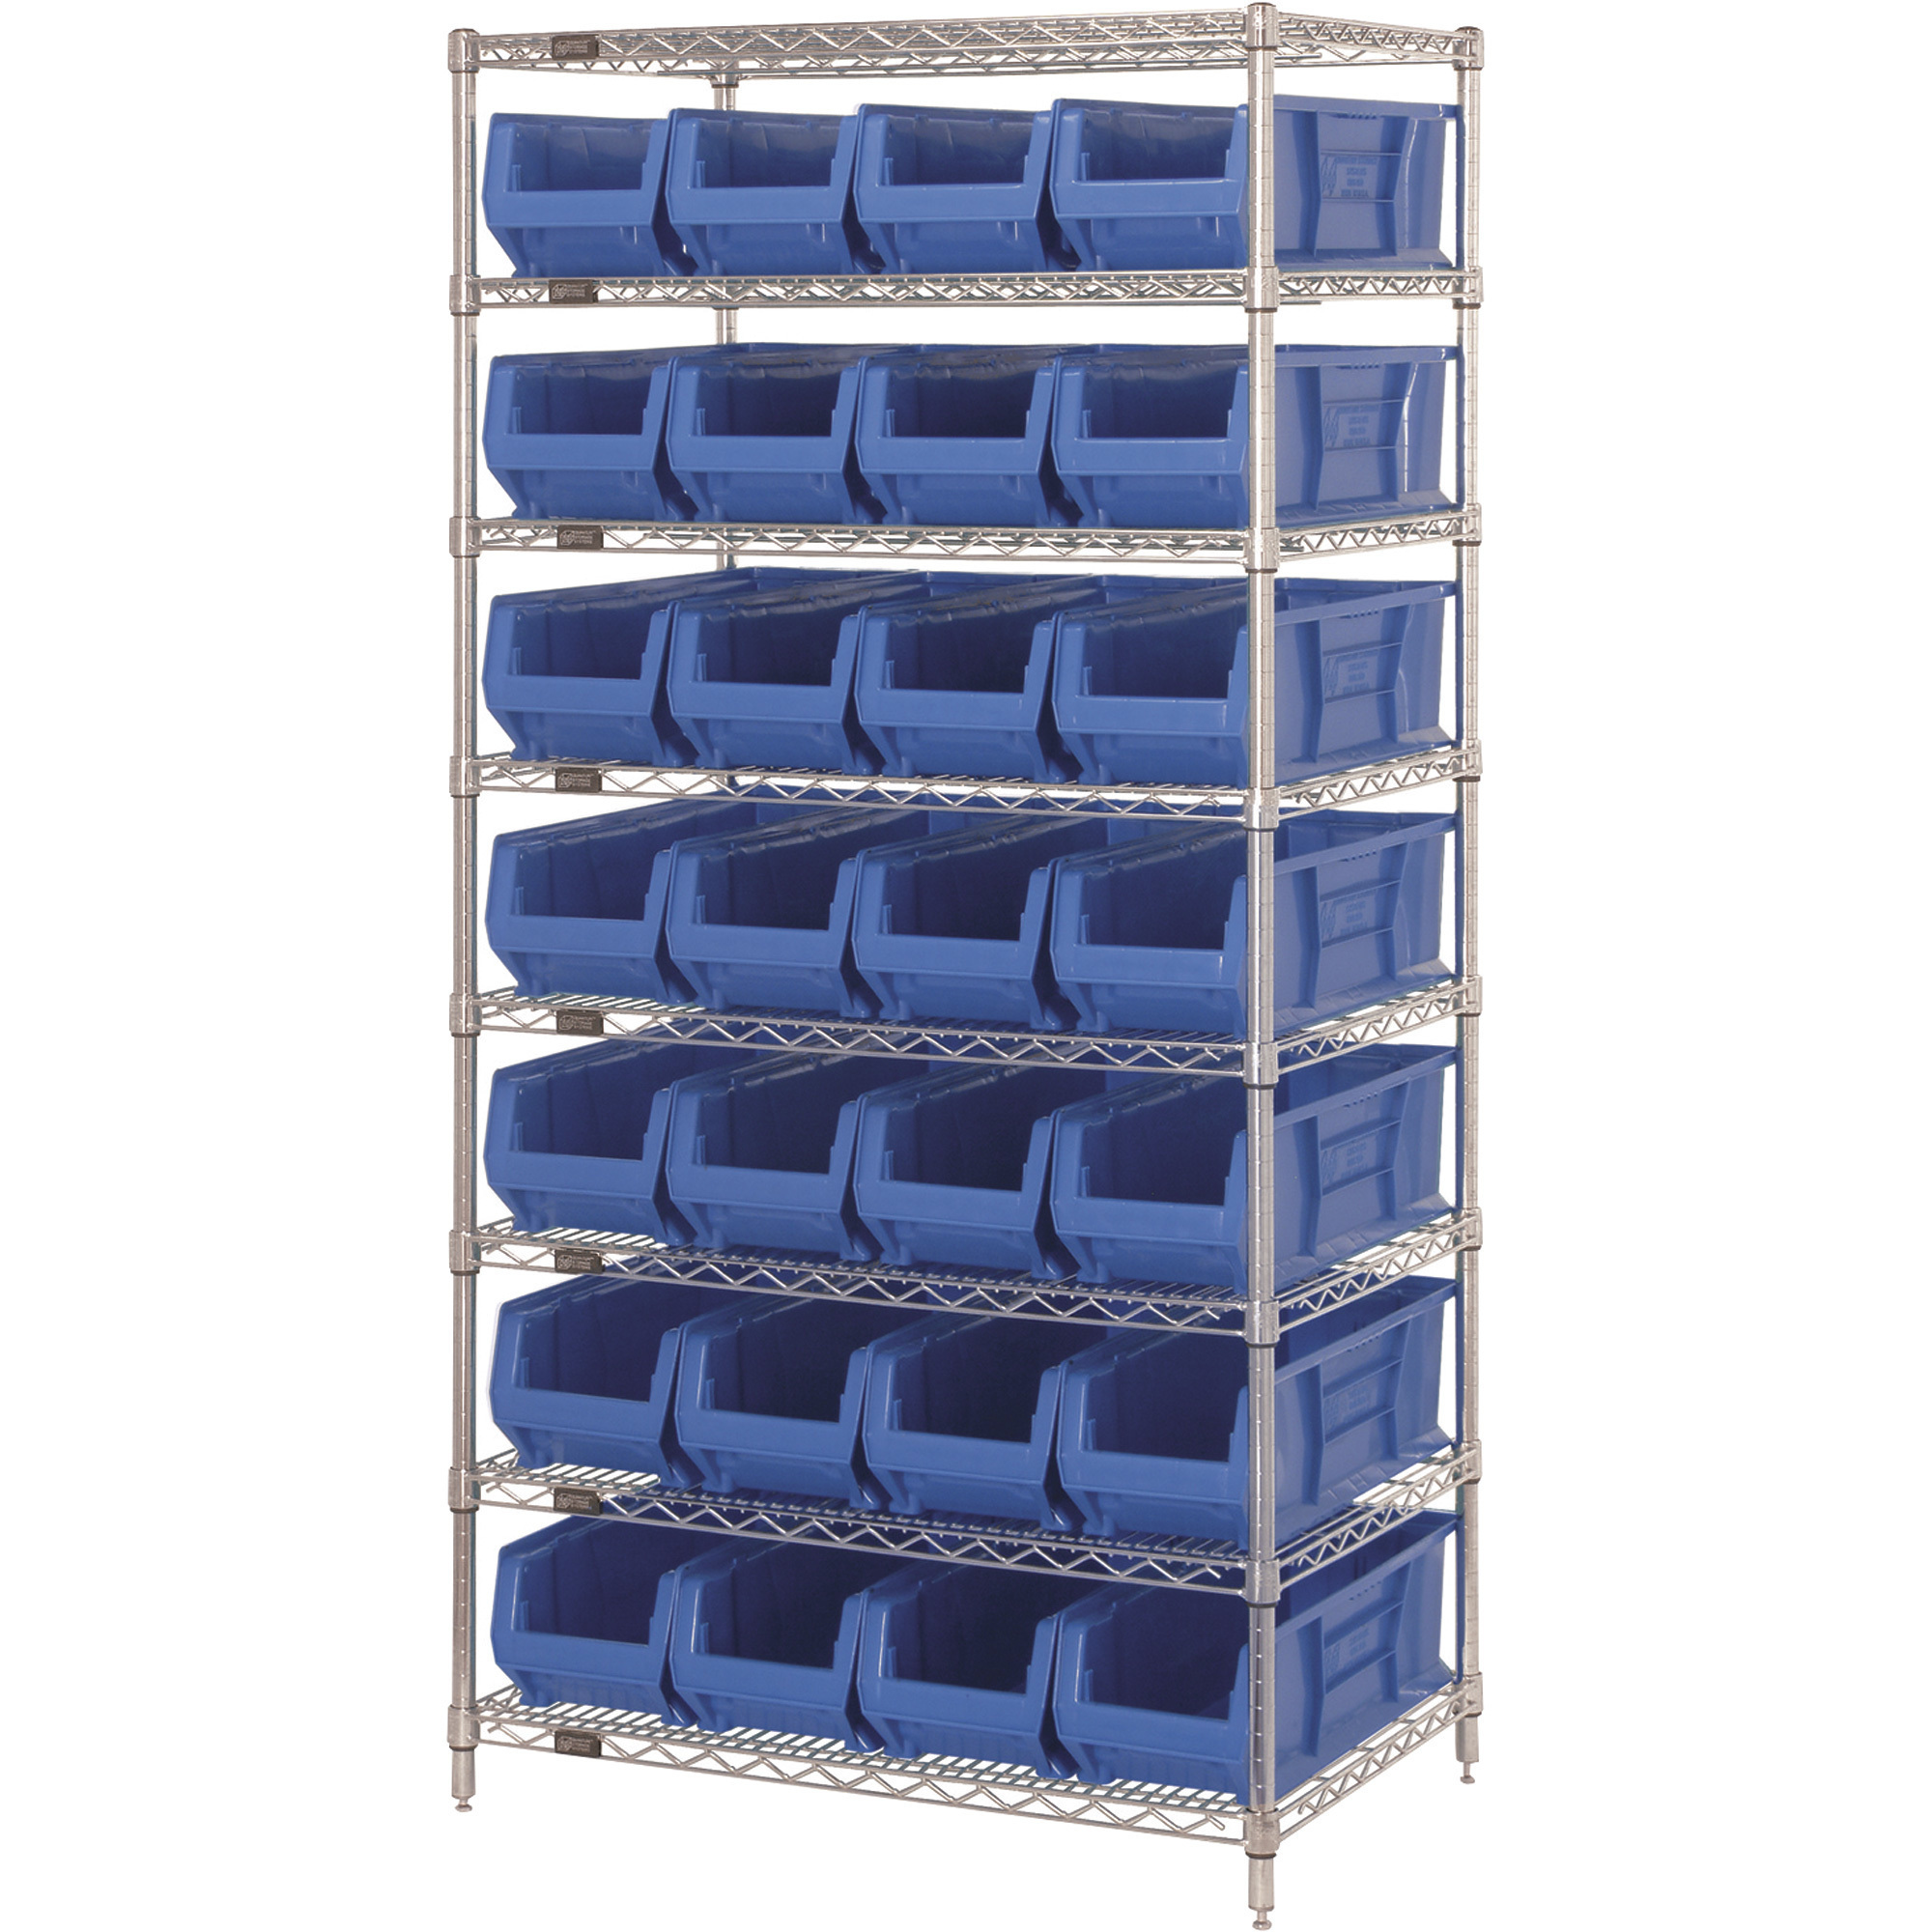 Quantum Storage Single Side Metal Shelving Unit with 28 Hulk Bins, 30Inch L x 36Inch W x 74Inch H, Blue, Model WR8-970BL